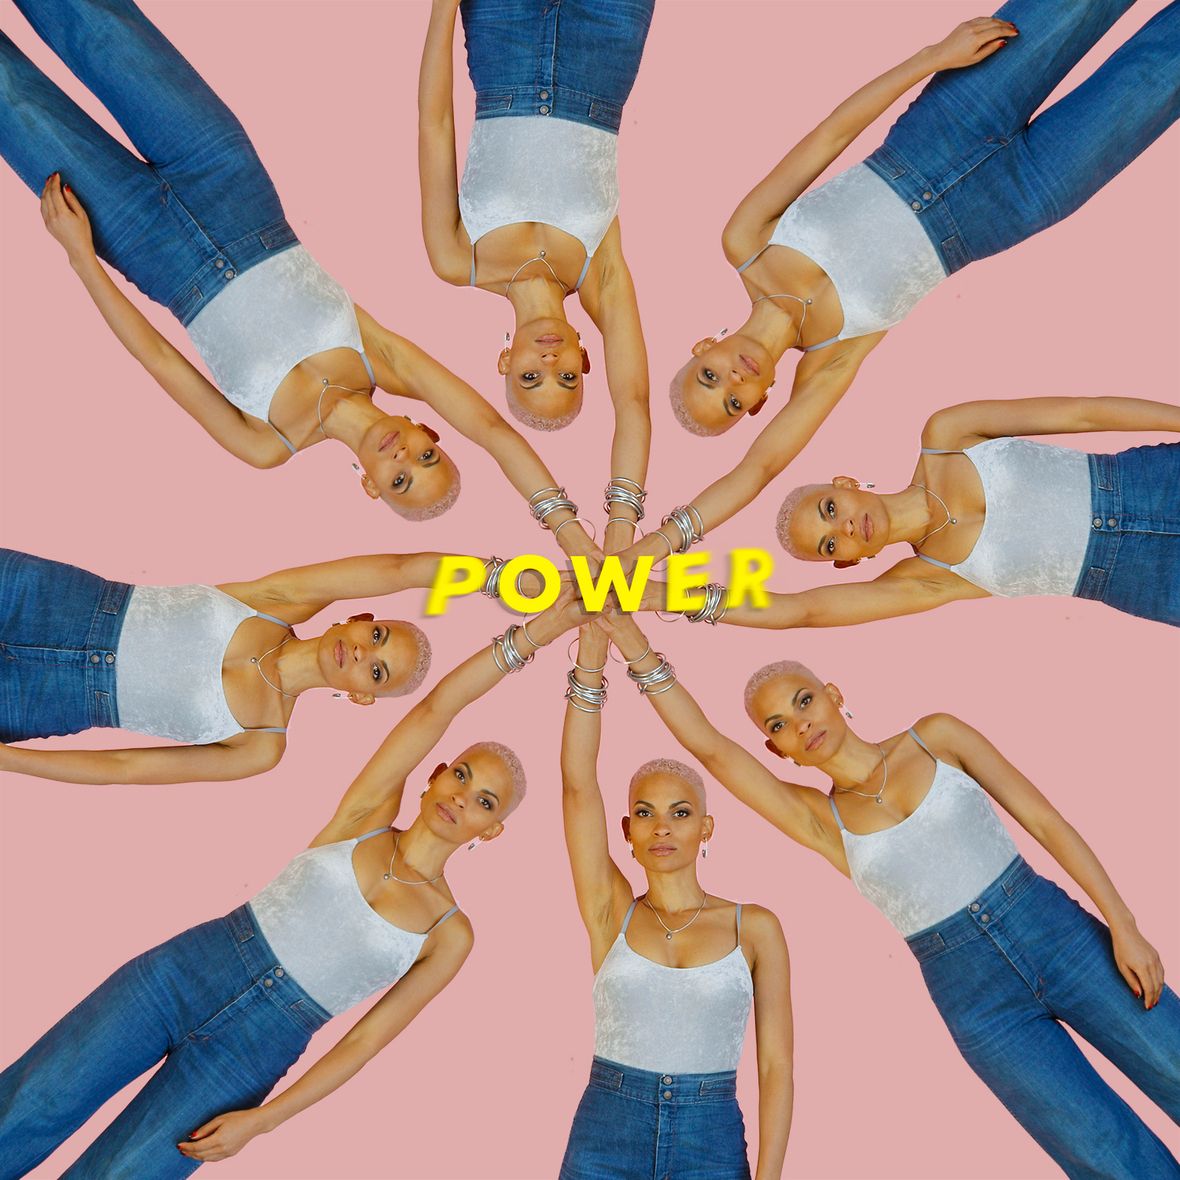 New Music: Goapele - Power + Announces New EP "Dreamseeker"